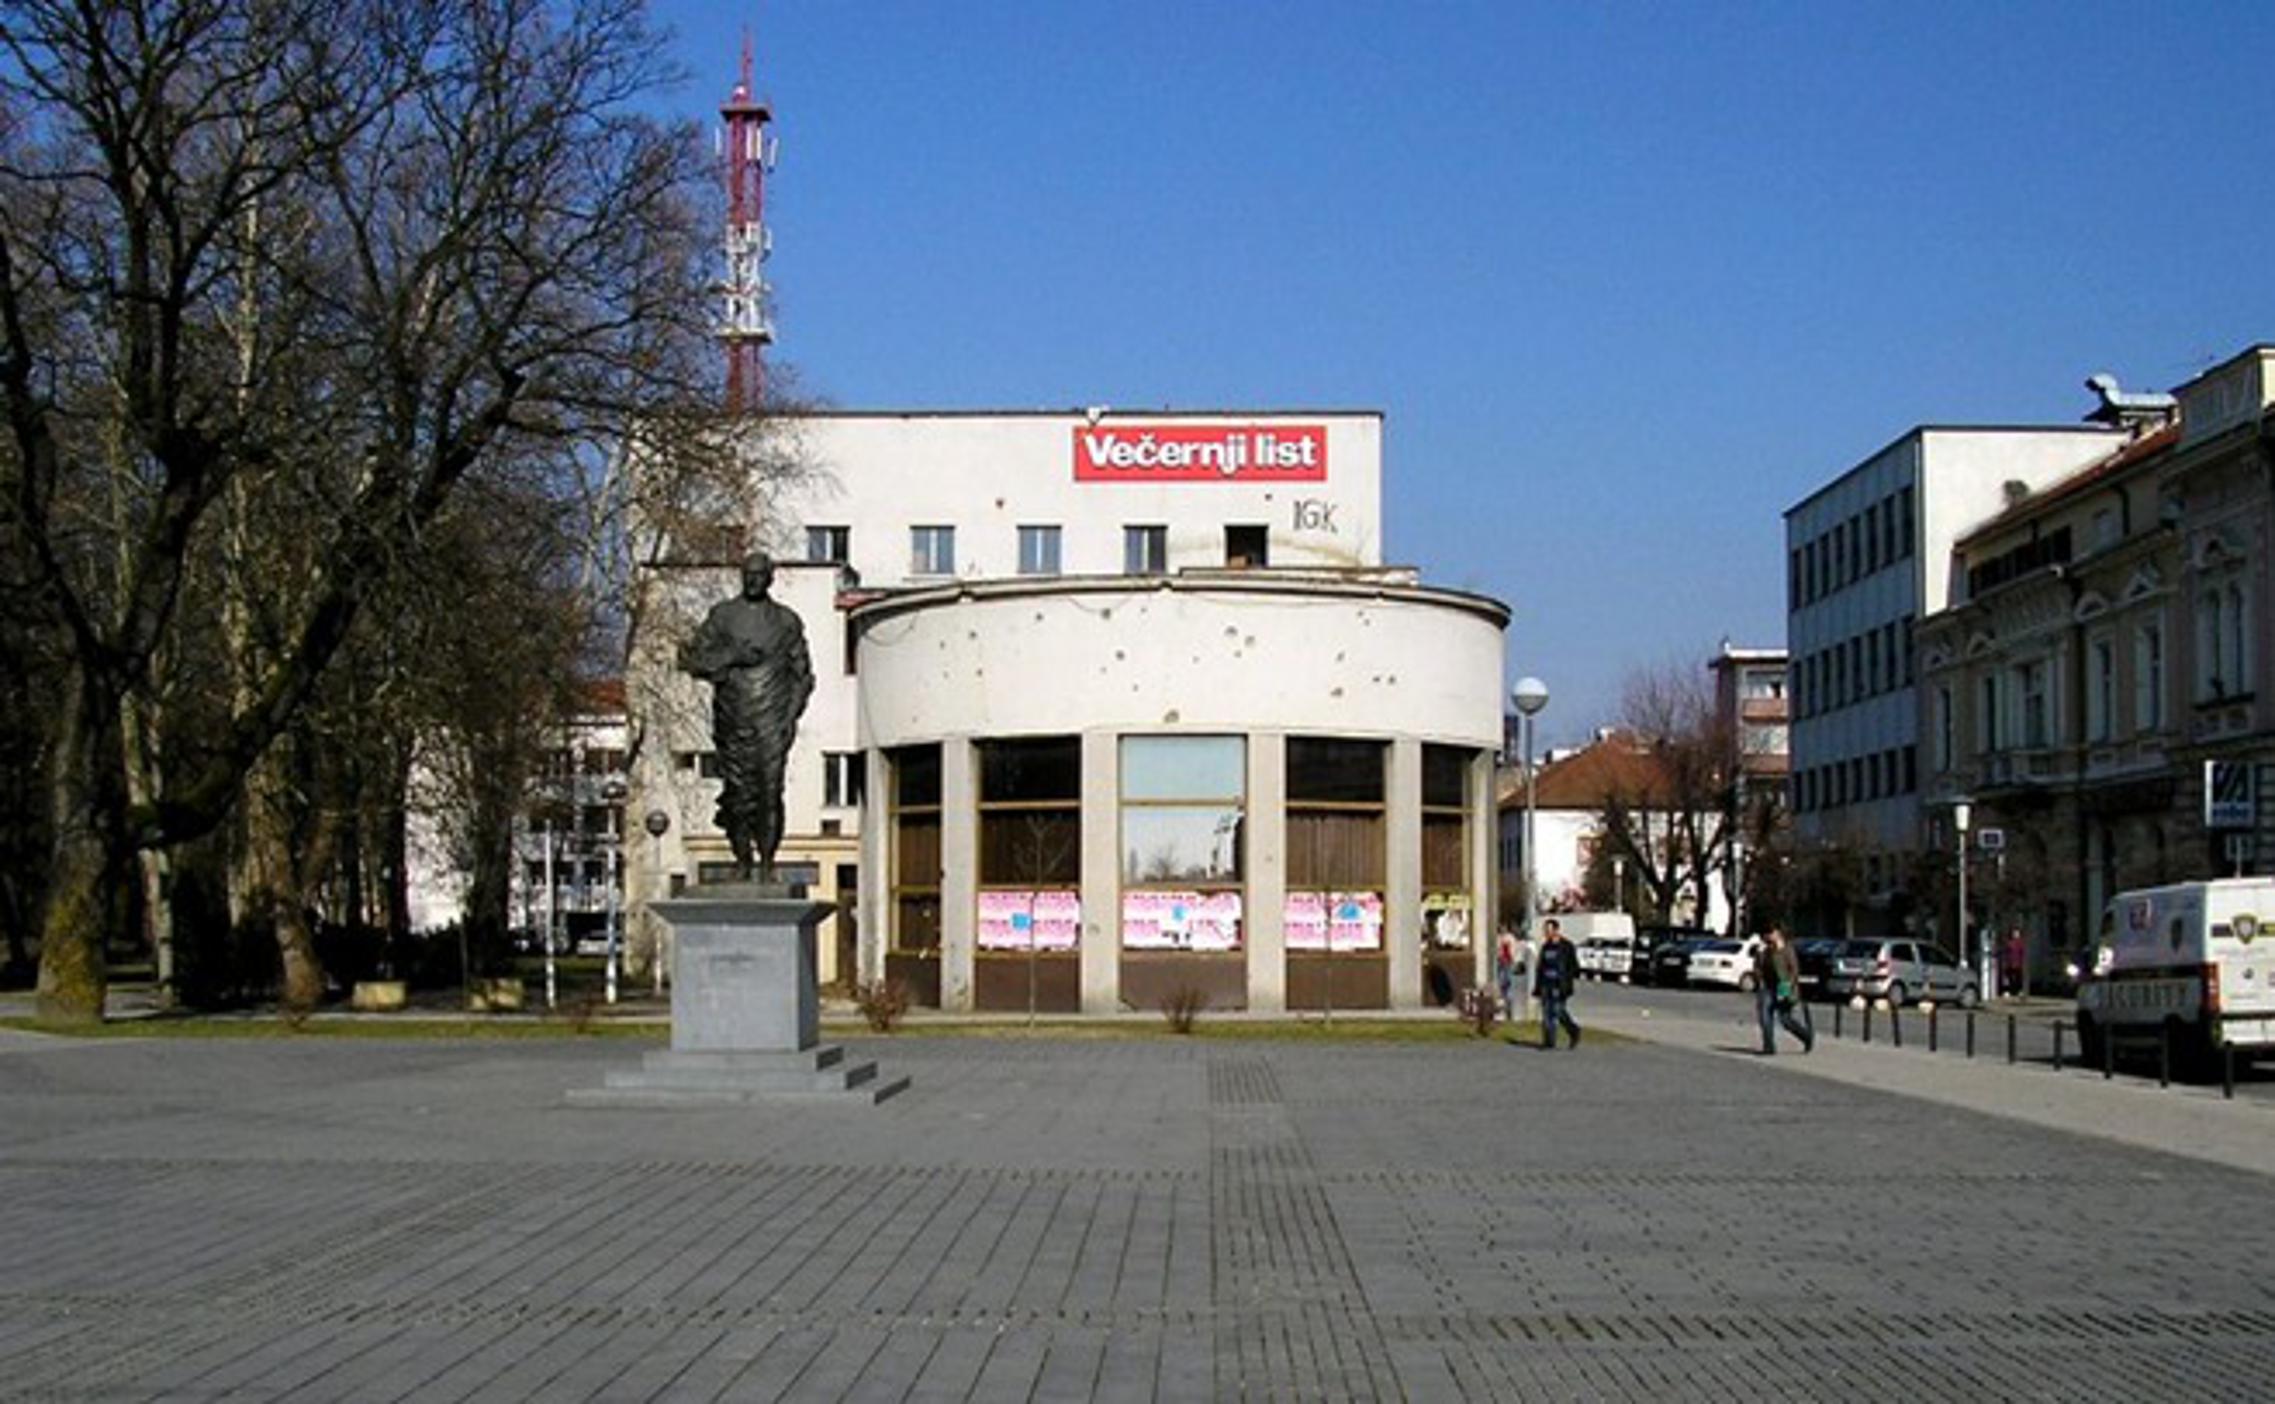 Hotel Park, plato ispred sa spomenikom Franji Tuđmanu